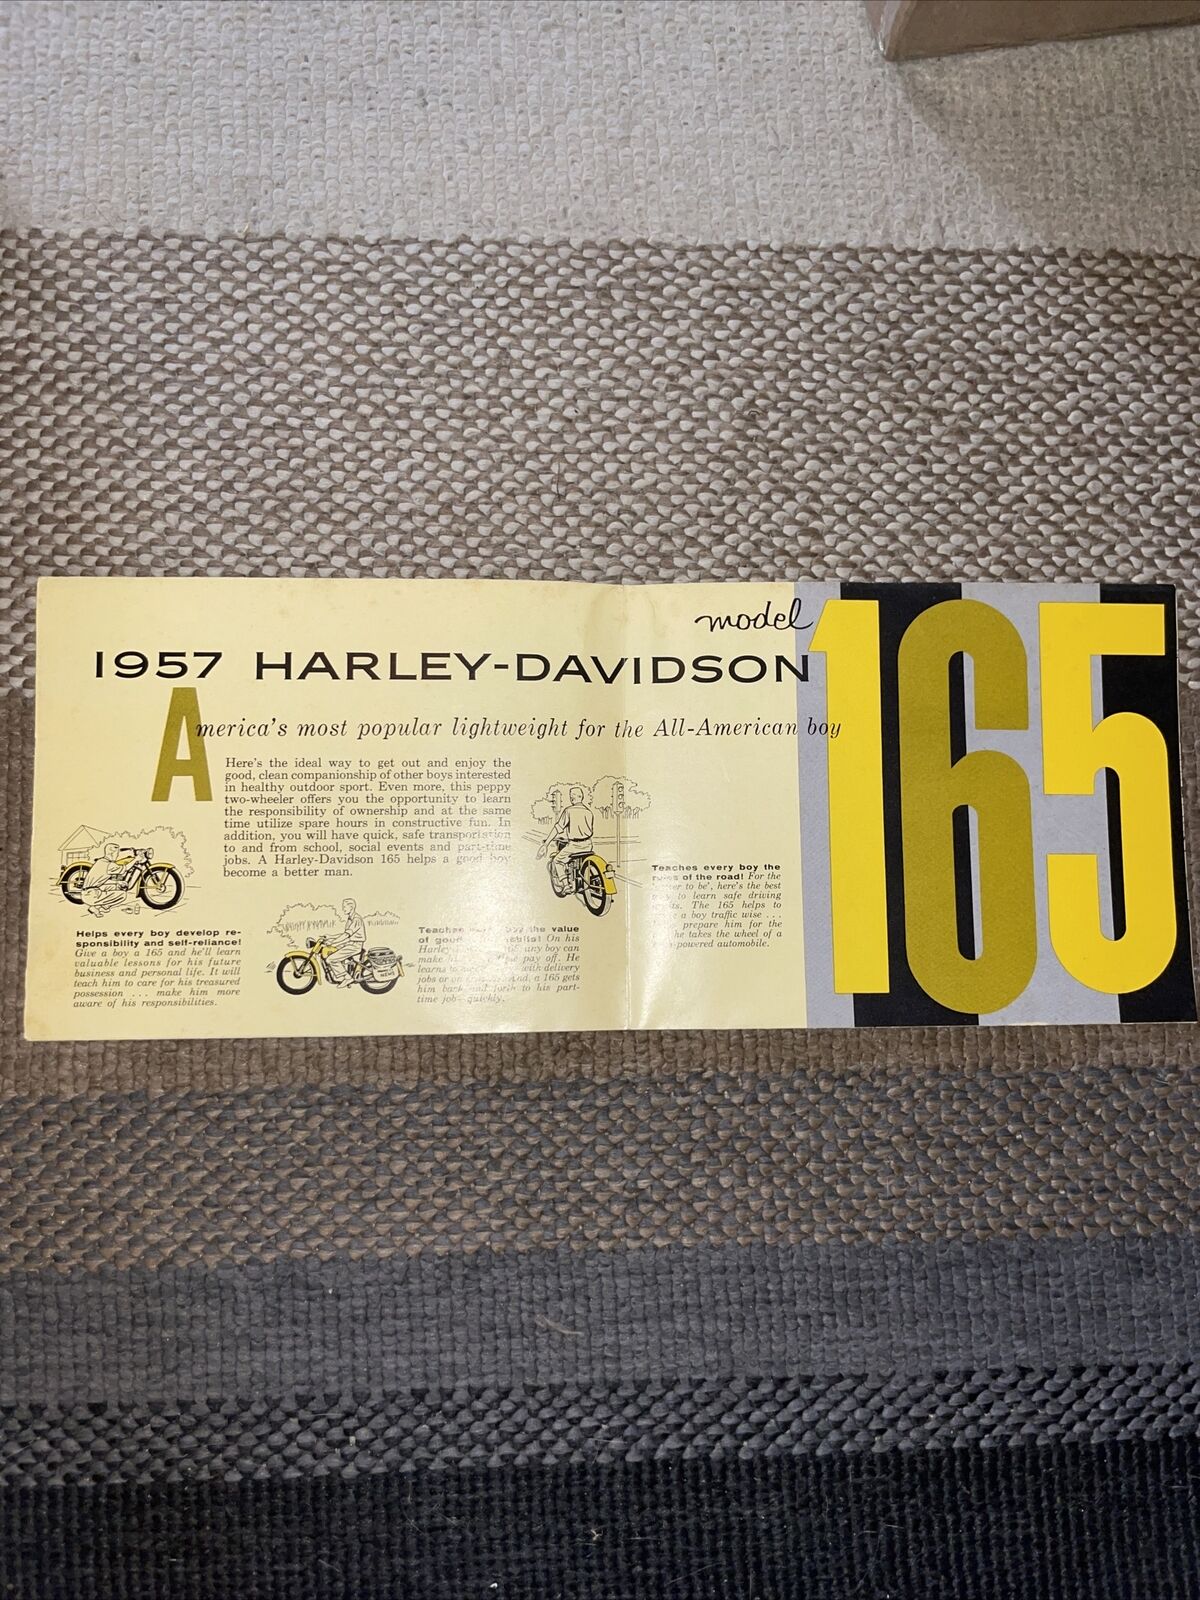 1957 Harley Davidson Motorcycle 165 Model Book Luxury Lightweight Good Condition